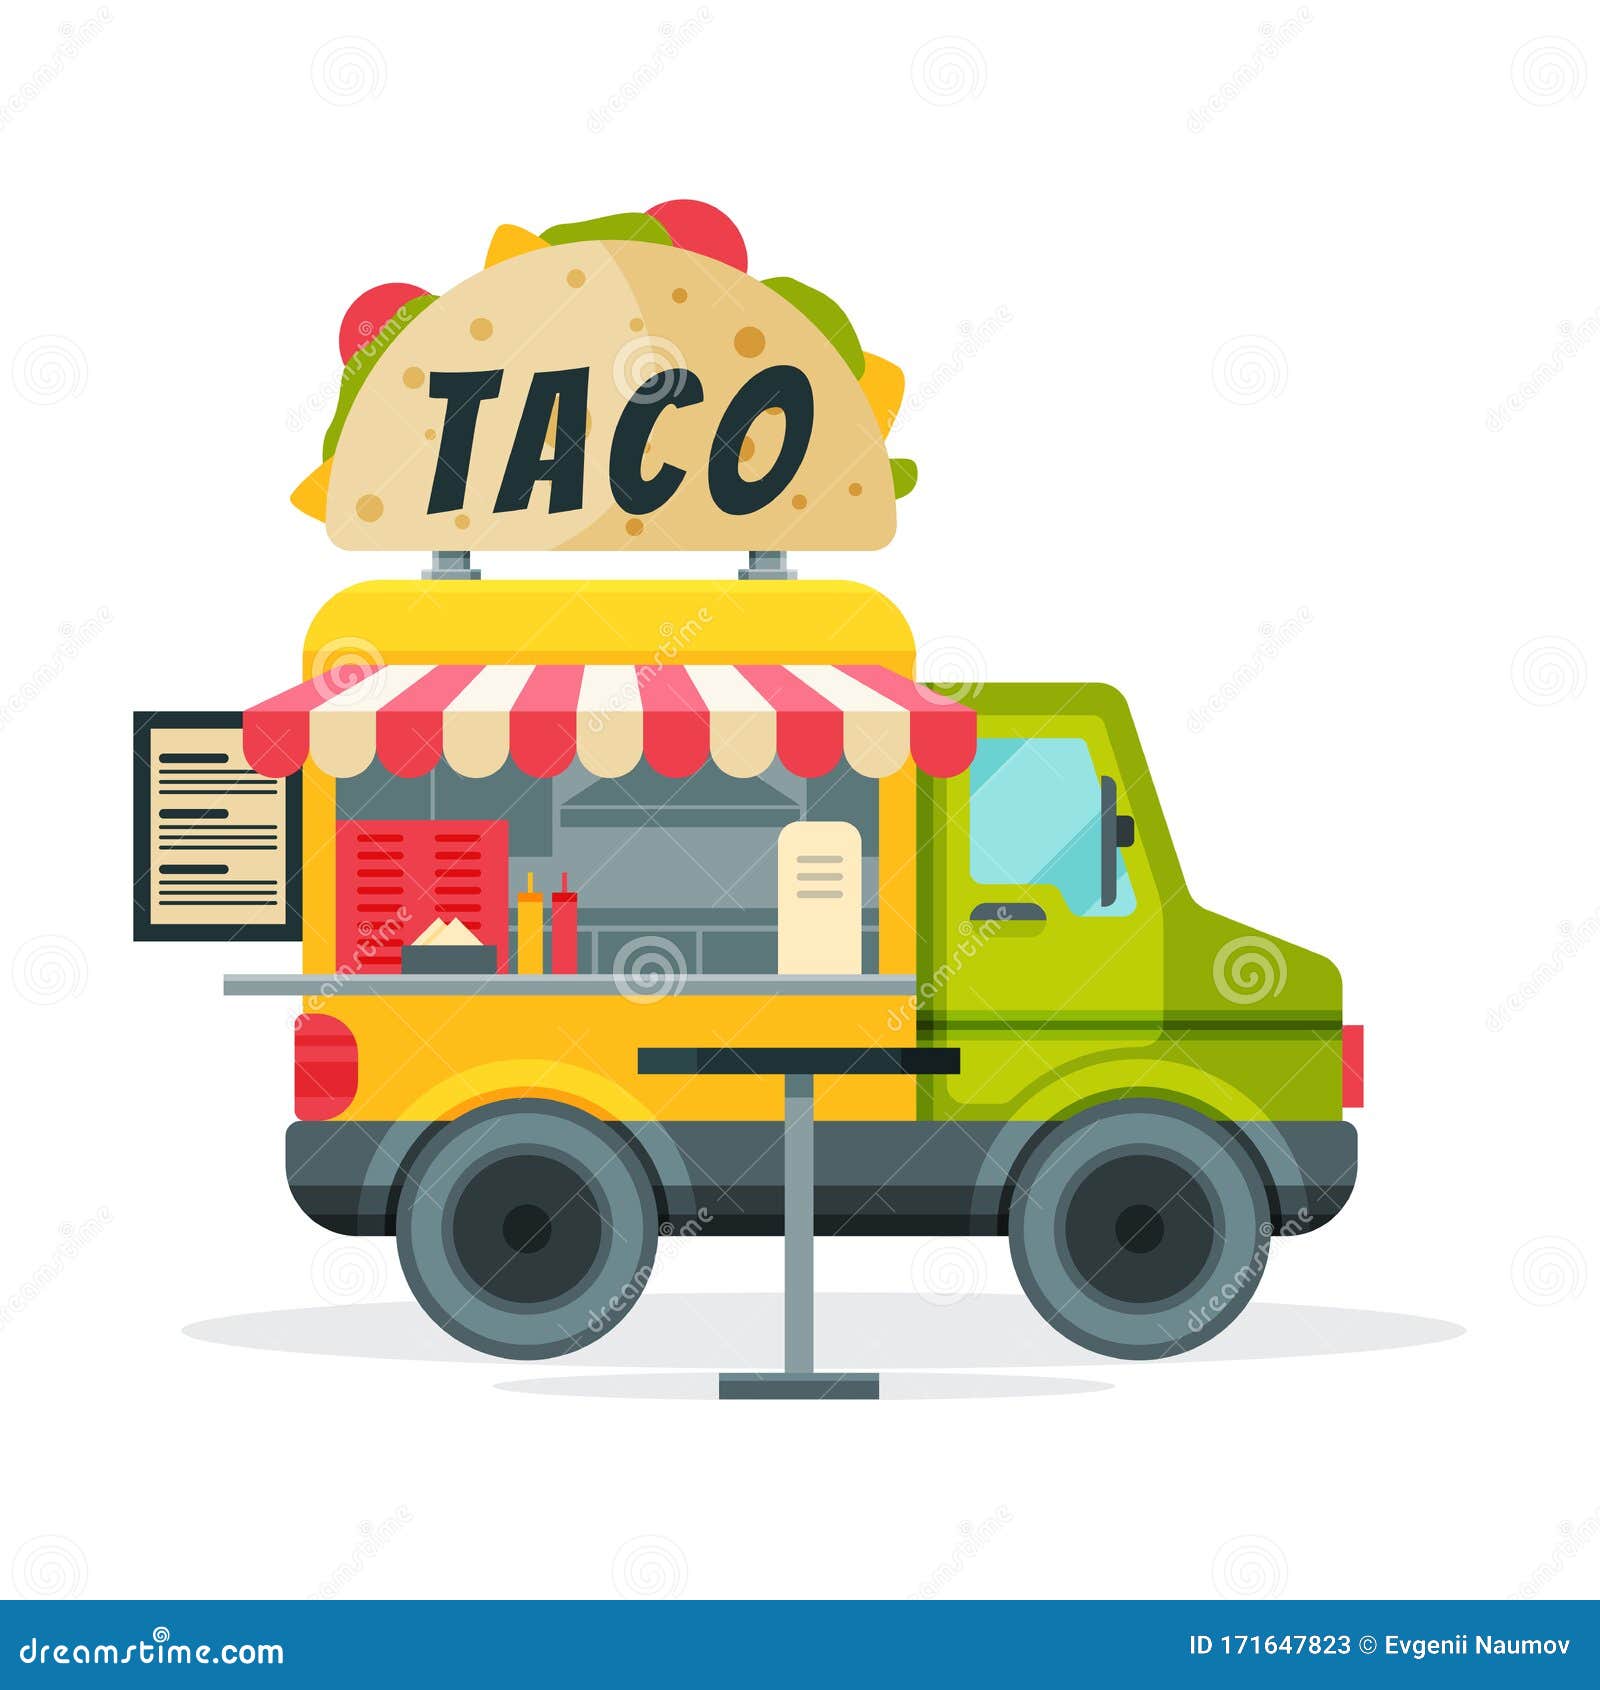 Taco Food Truck, Street Meal Van, Tasty Fast Food Delivery